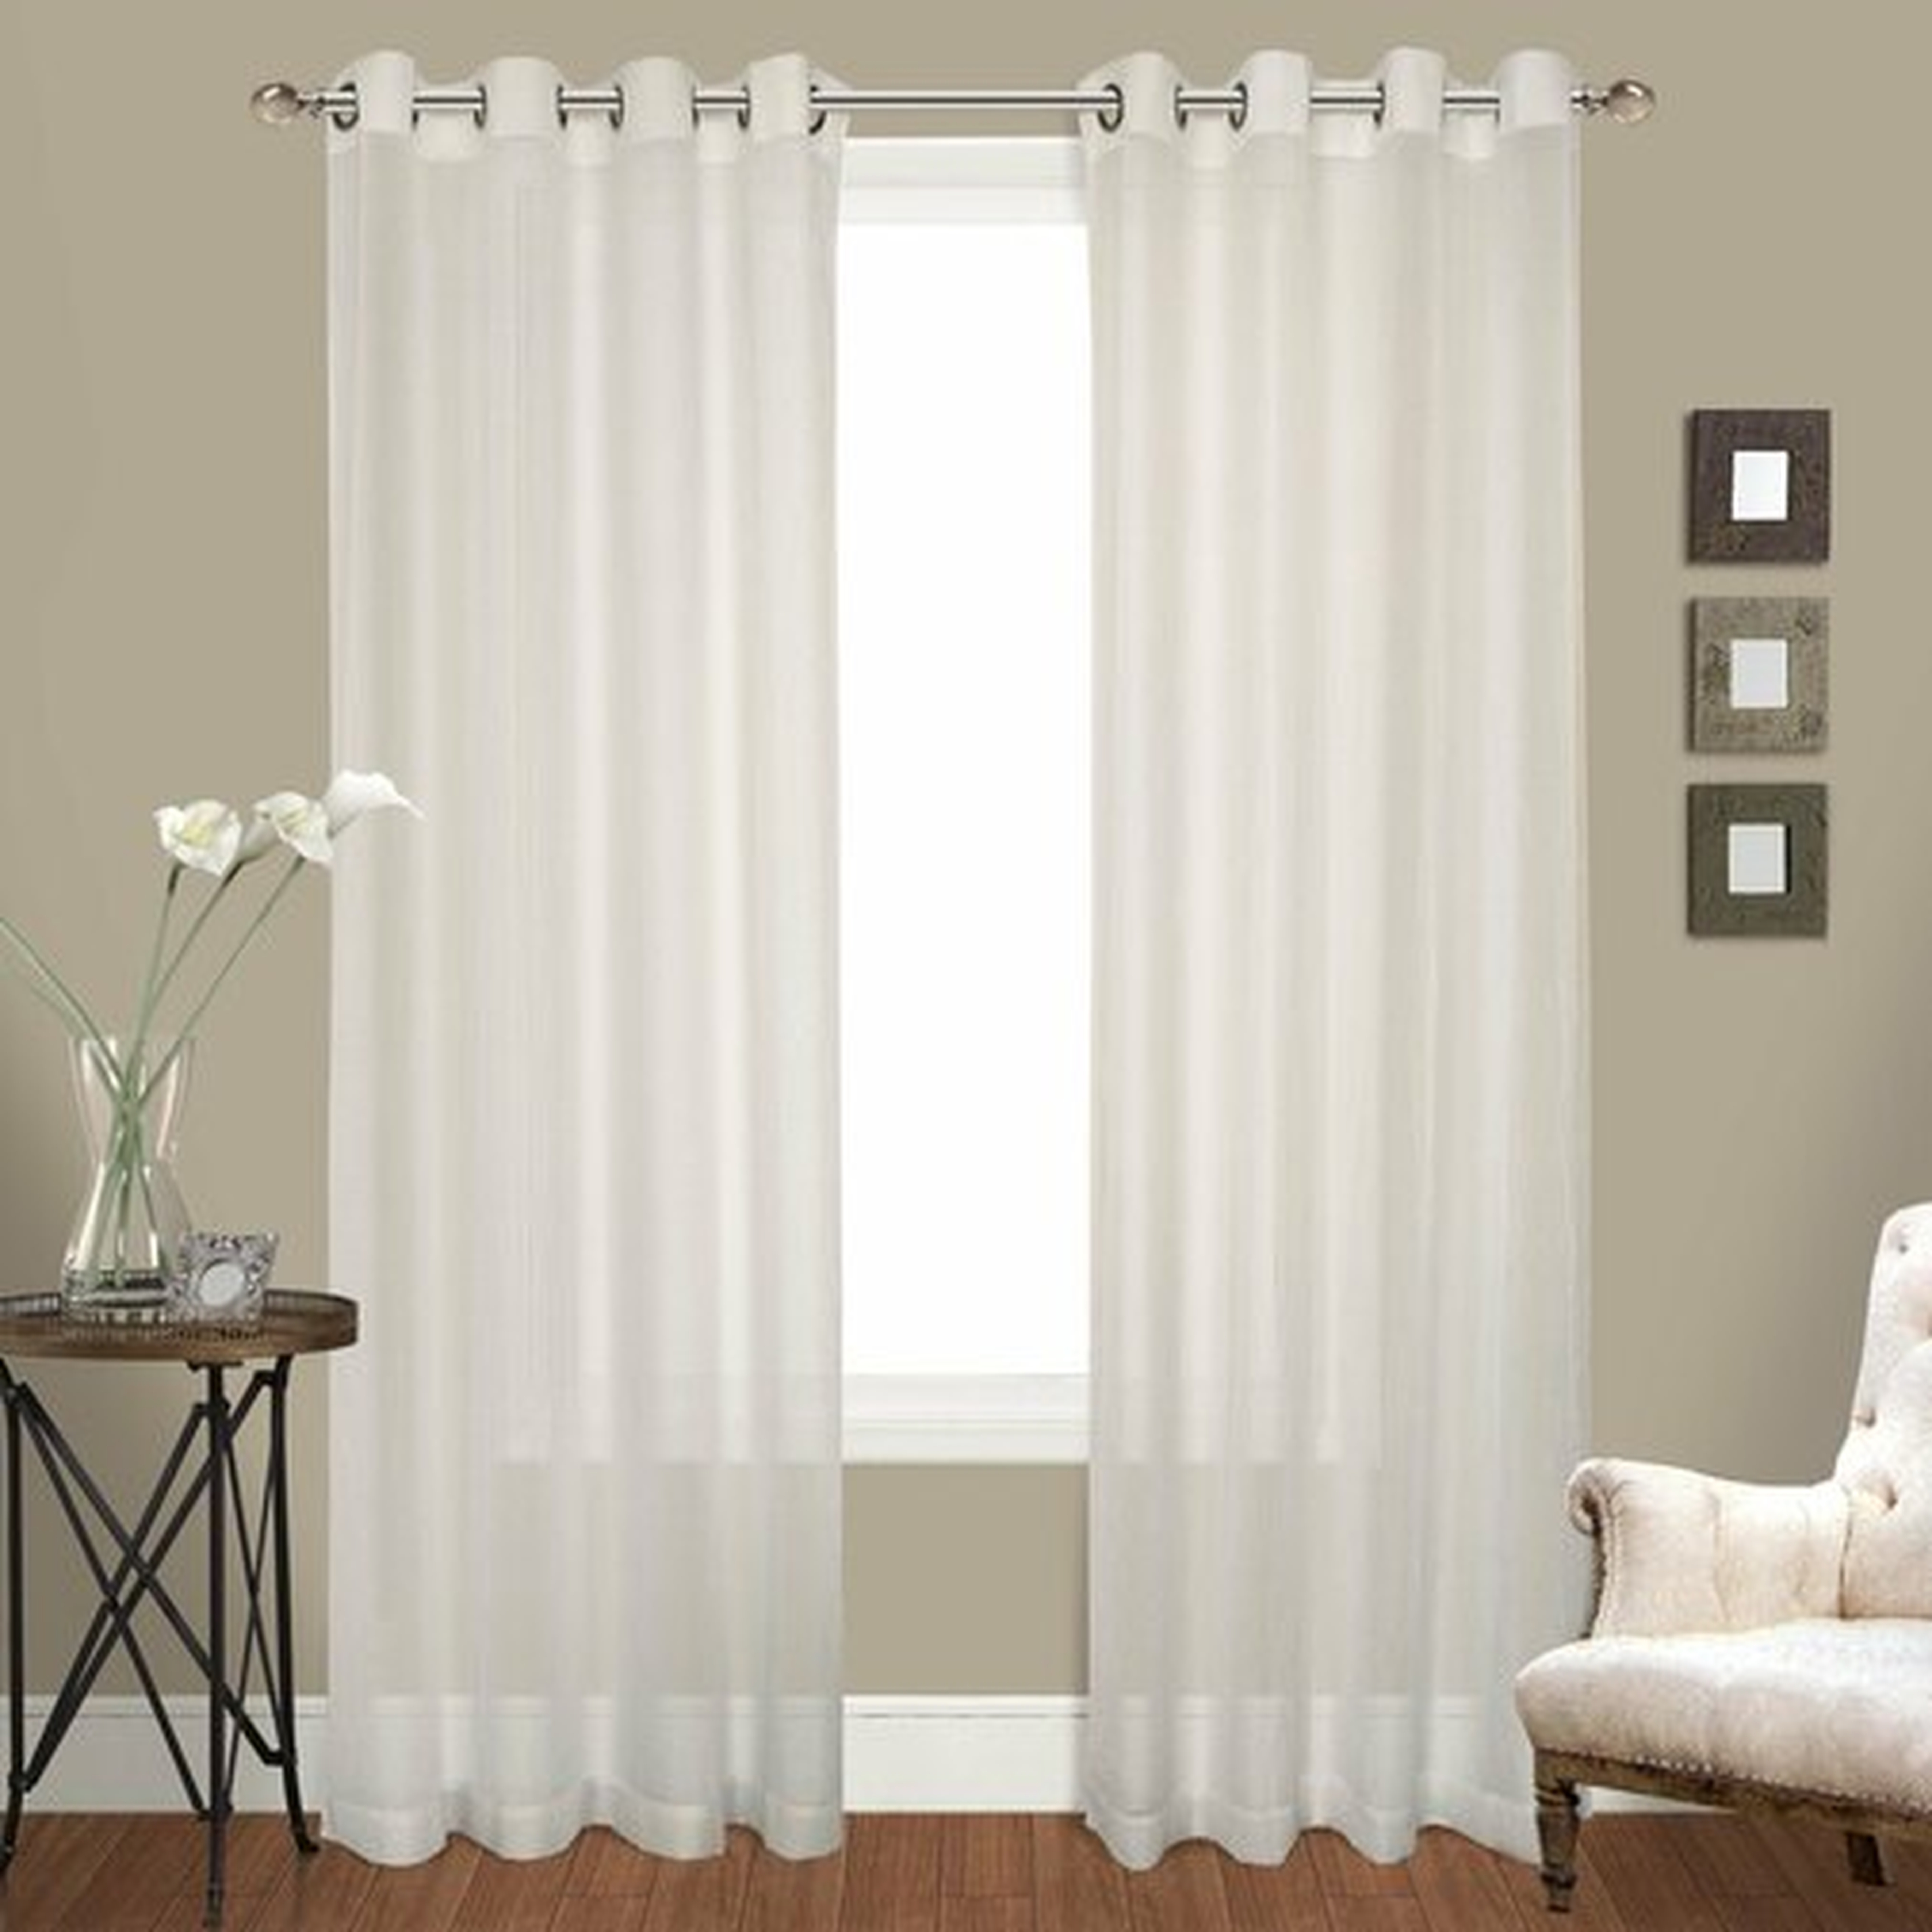 Ortley Crushed Voile Solid Sheer Grommet Curtain Panels (set of 2) - 108", natural - Wayfair